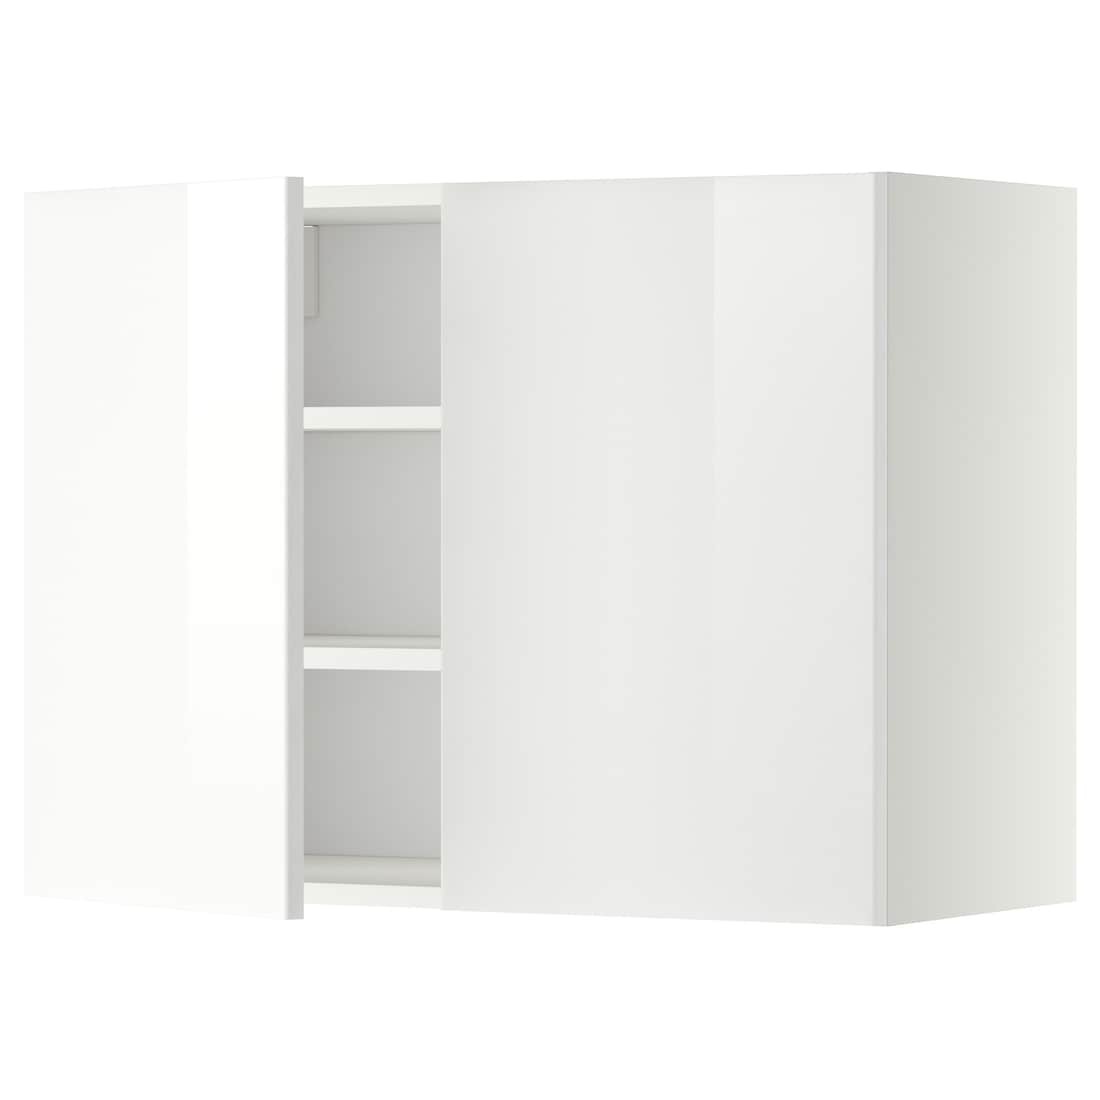 METOD МЕТОД Навесной шкаф с полками / 2 дверцы, белый / Ringhult белый, 80x60 см